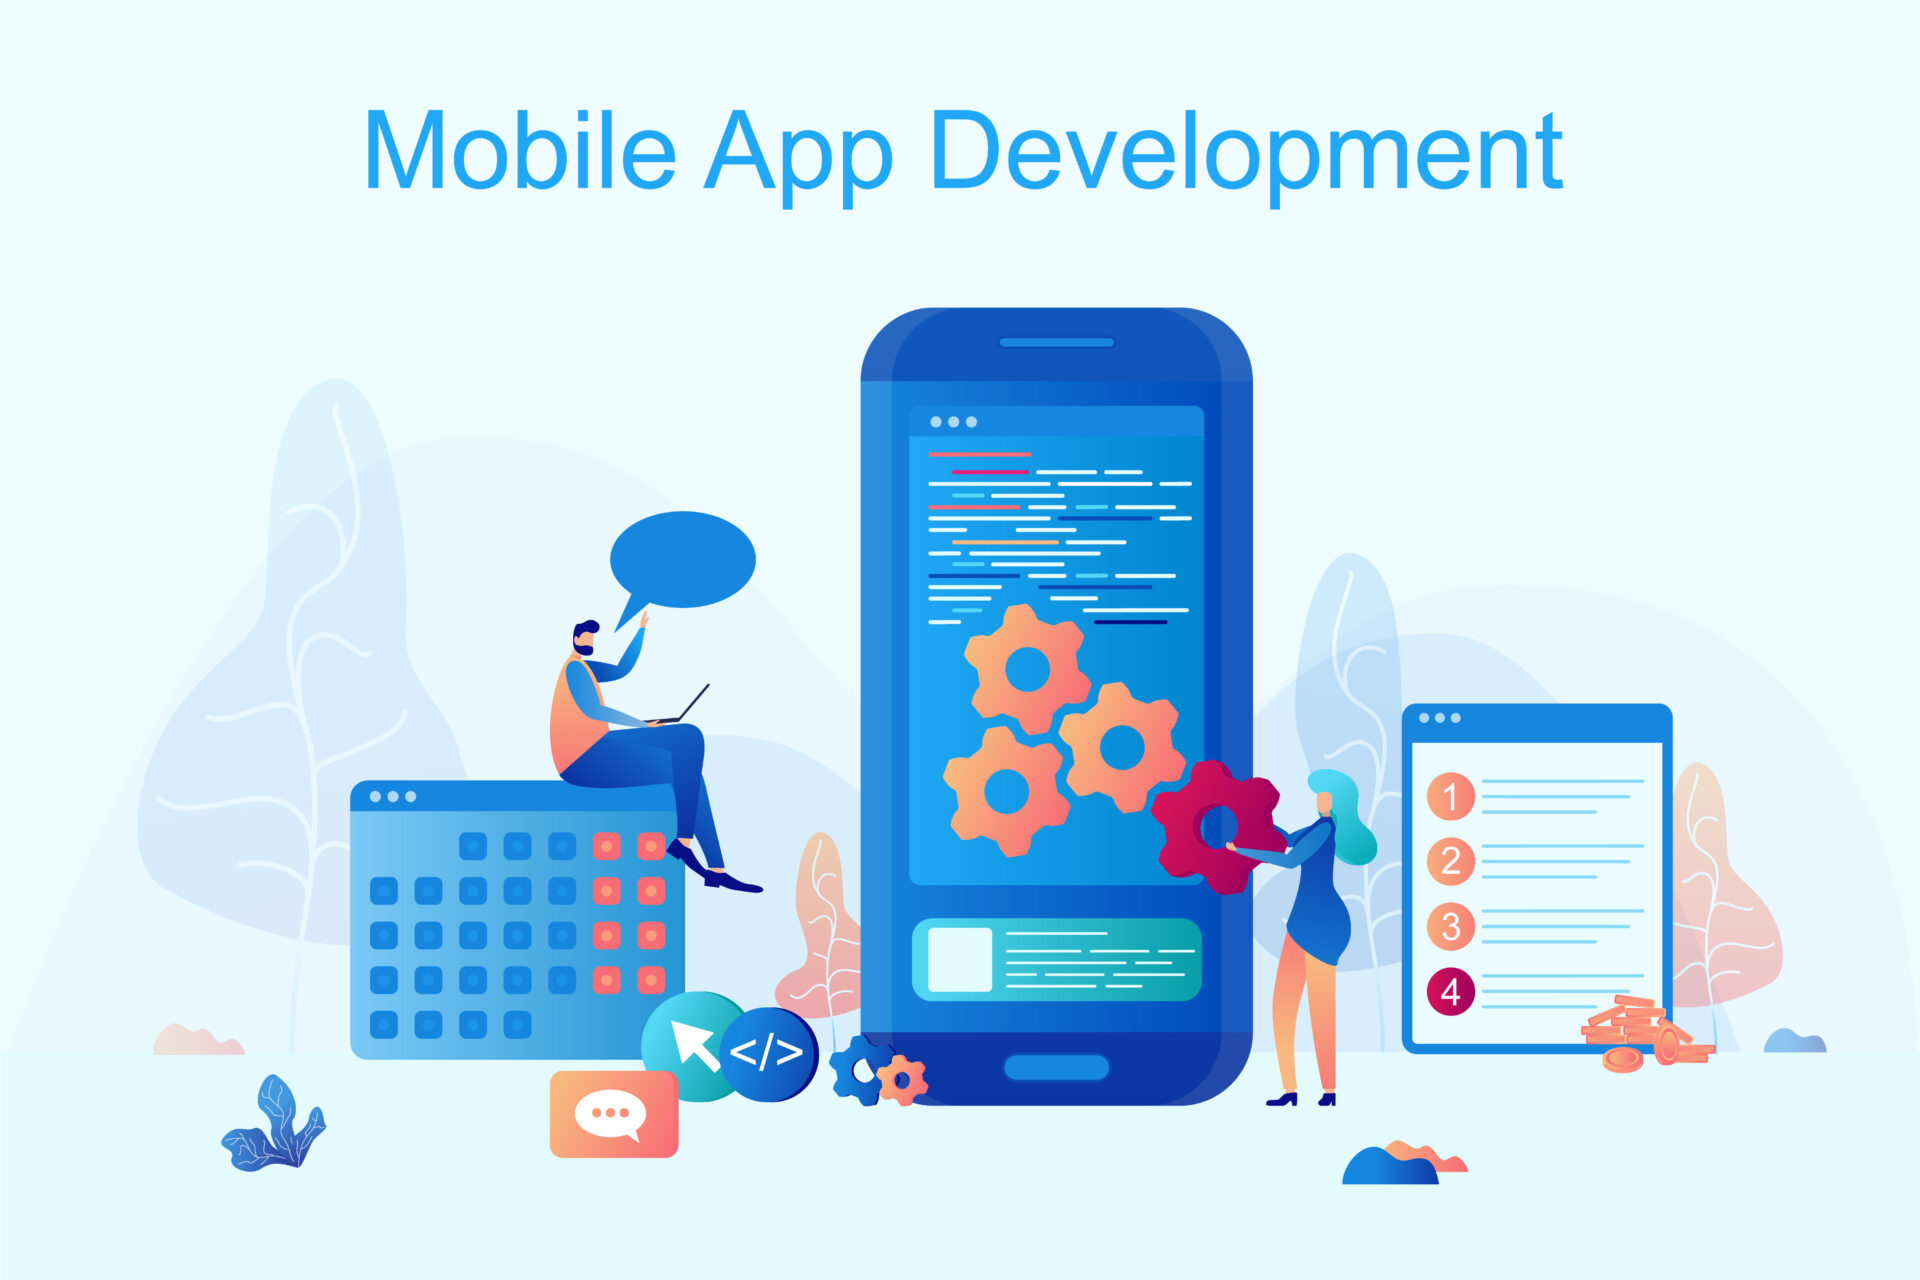 Mobile App Developers brainstorming ideas